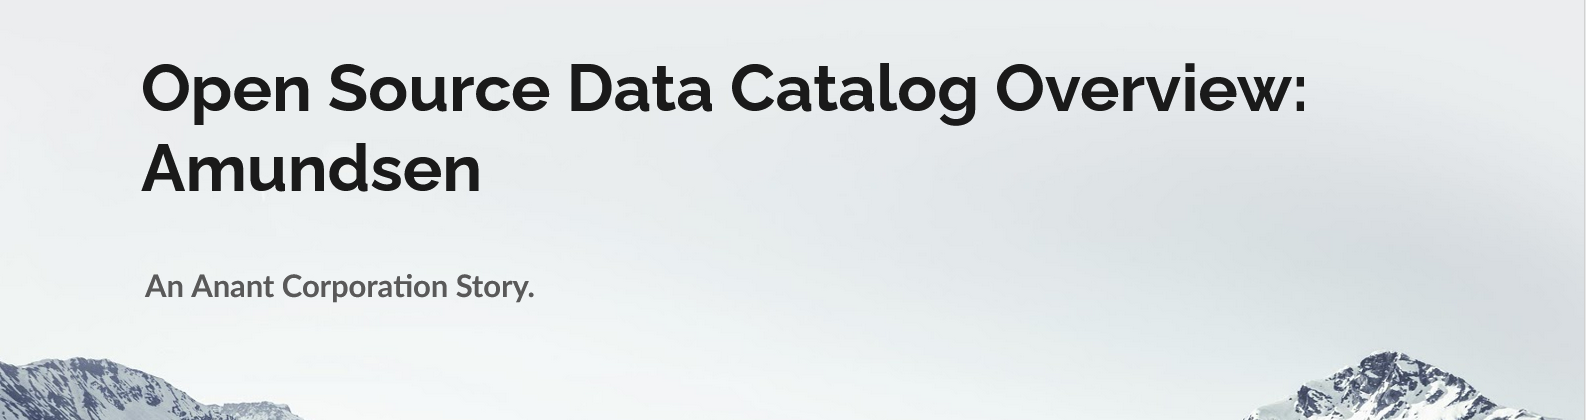 Data Catalog Overview: Amundson